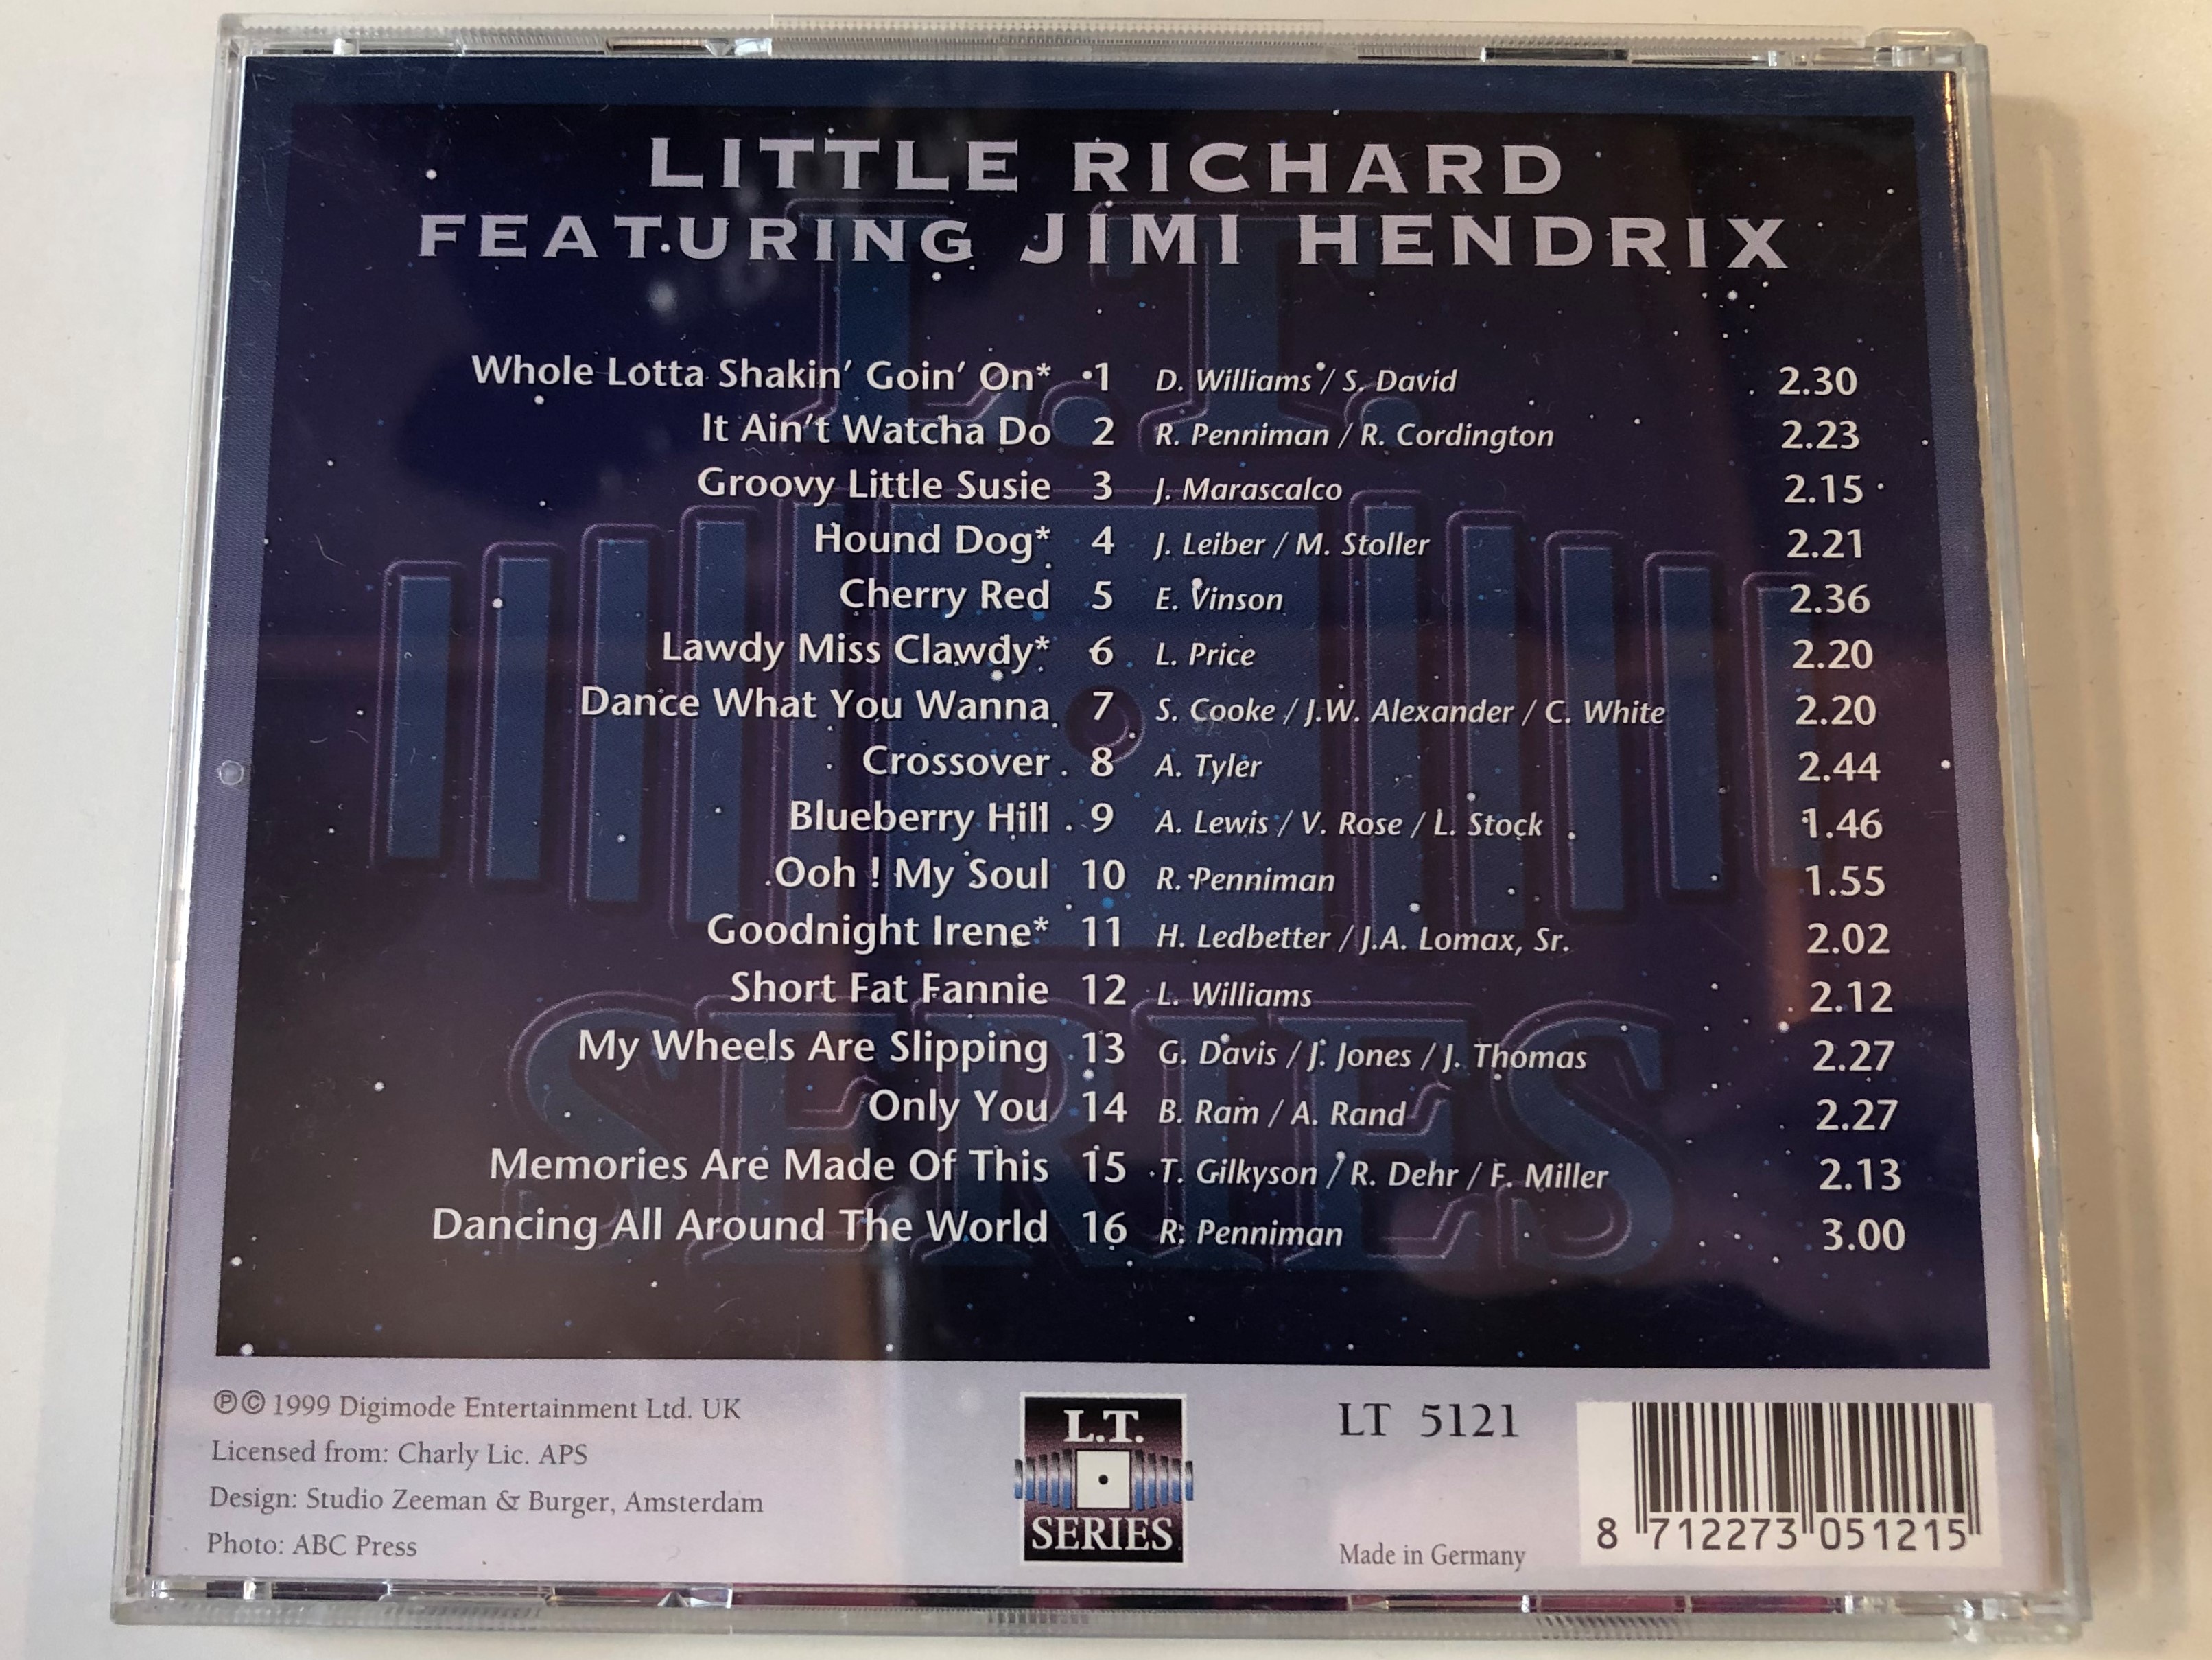 little-richard-featuring-jimi-hendrix-whole-lotta-shakin-goin-on-lawdy-miss-clawdy-ooh-my-soul-my-wheels-are-slipping-goodnight-irene-l.t.-series-audio-cd-1999-lt-5121-2-.jpg